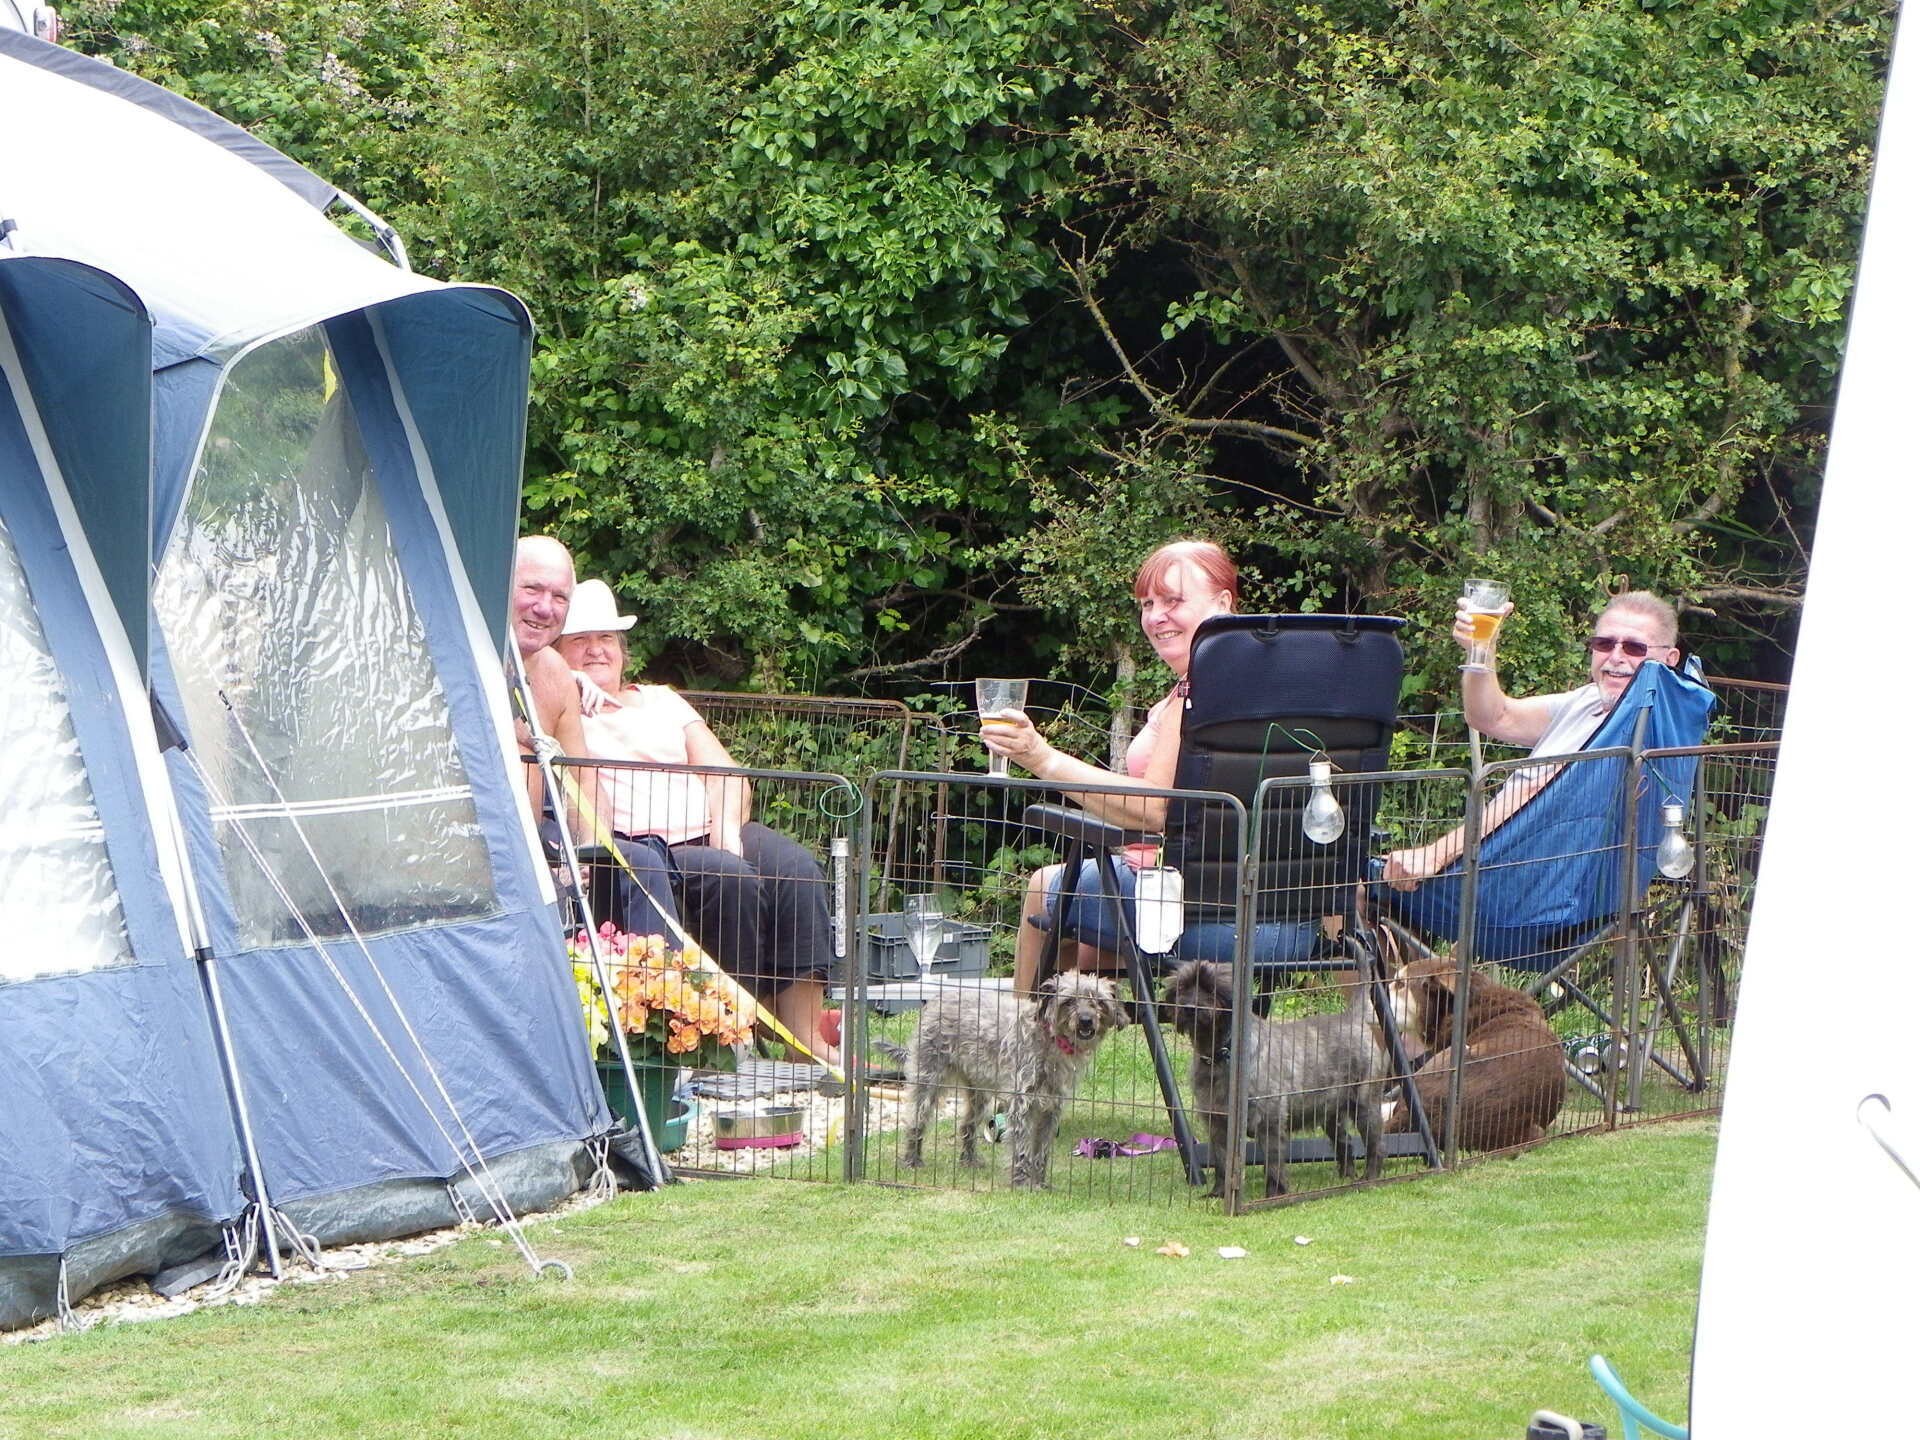 Adults & Their Dogs Enjoying Caravan Site